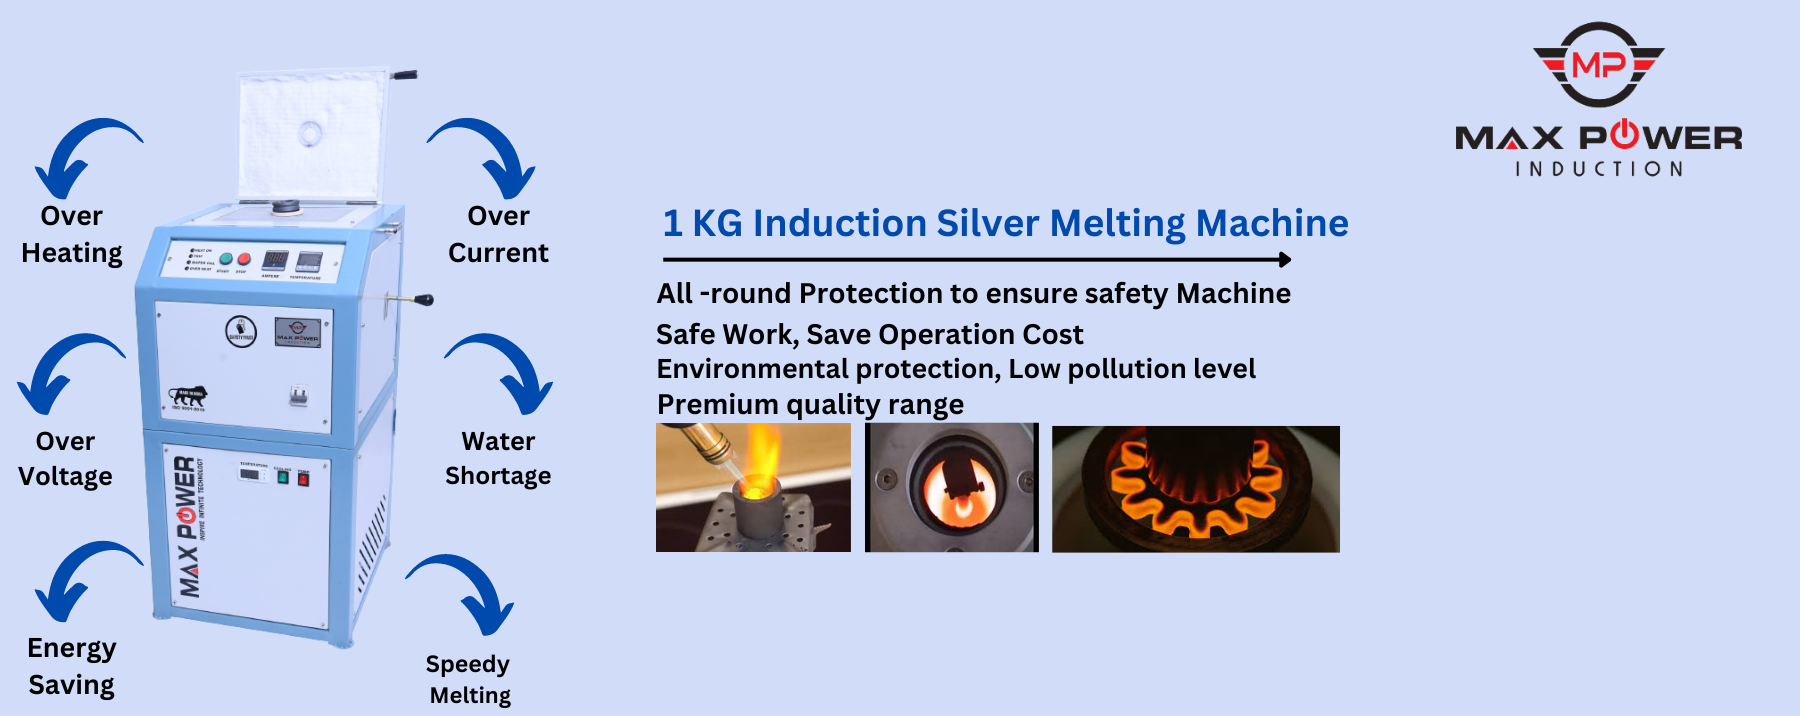 1 KG Induction Silver Melting Machine